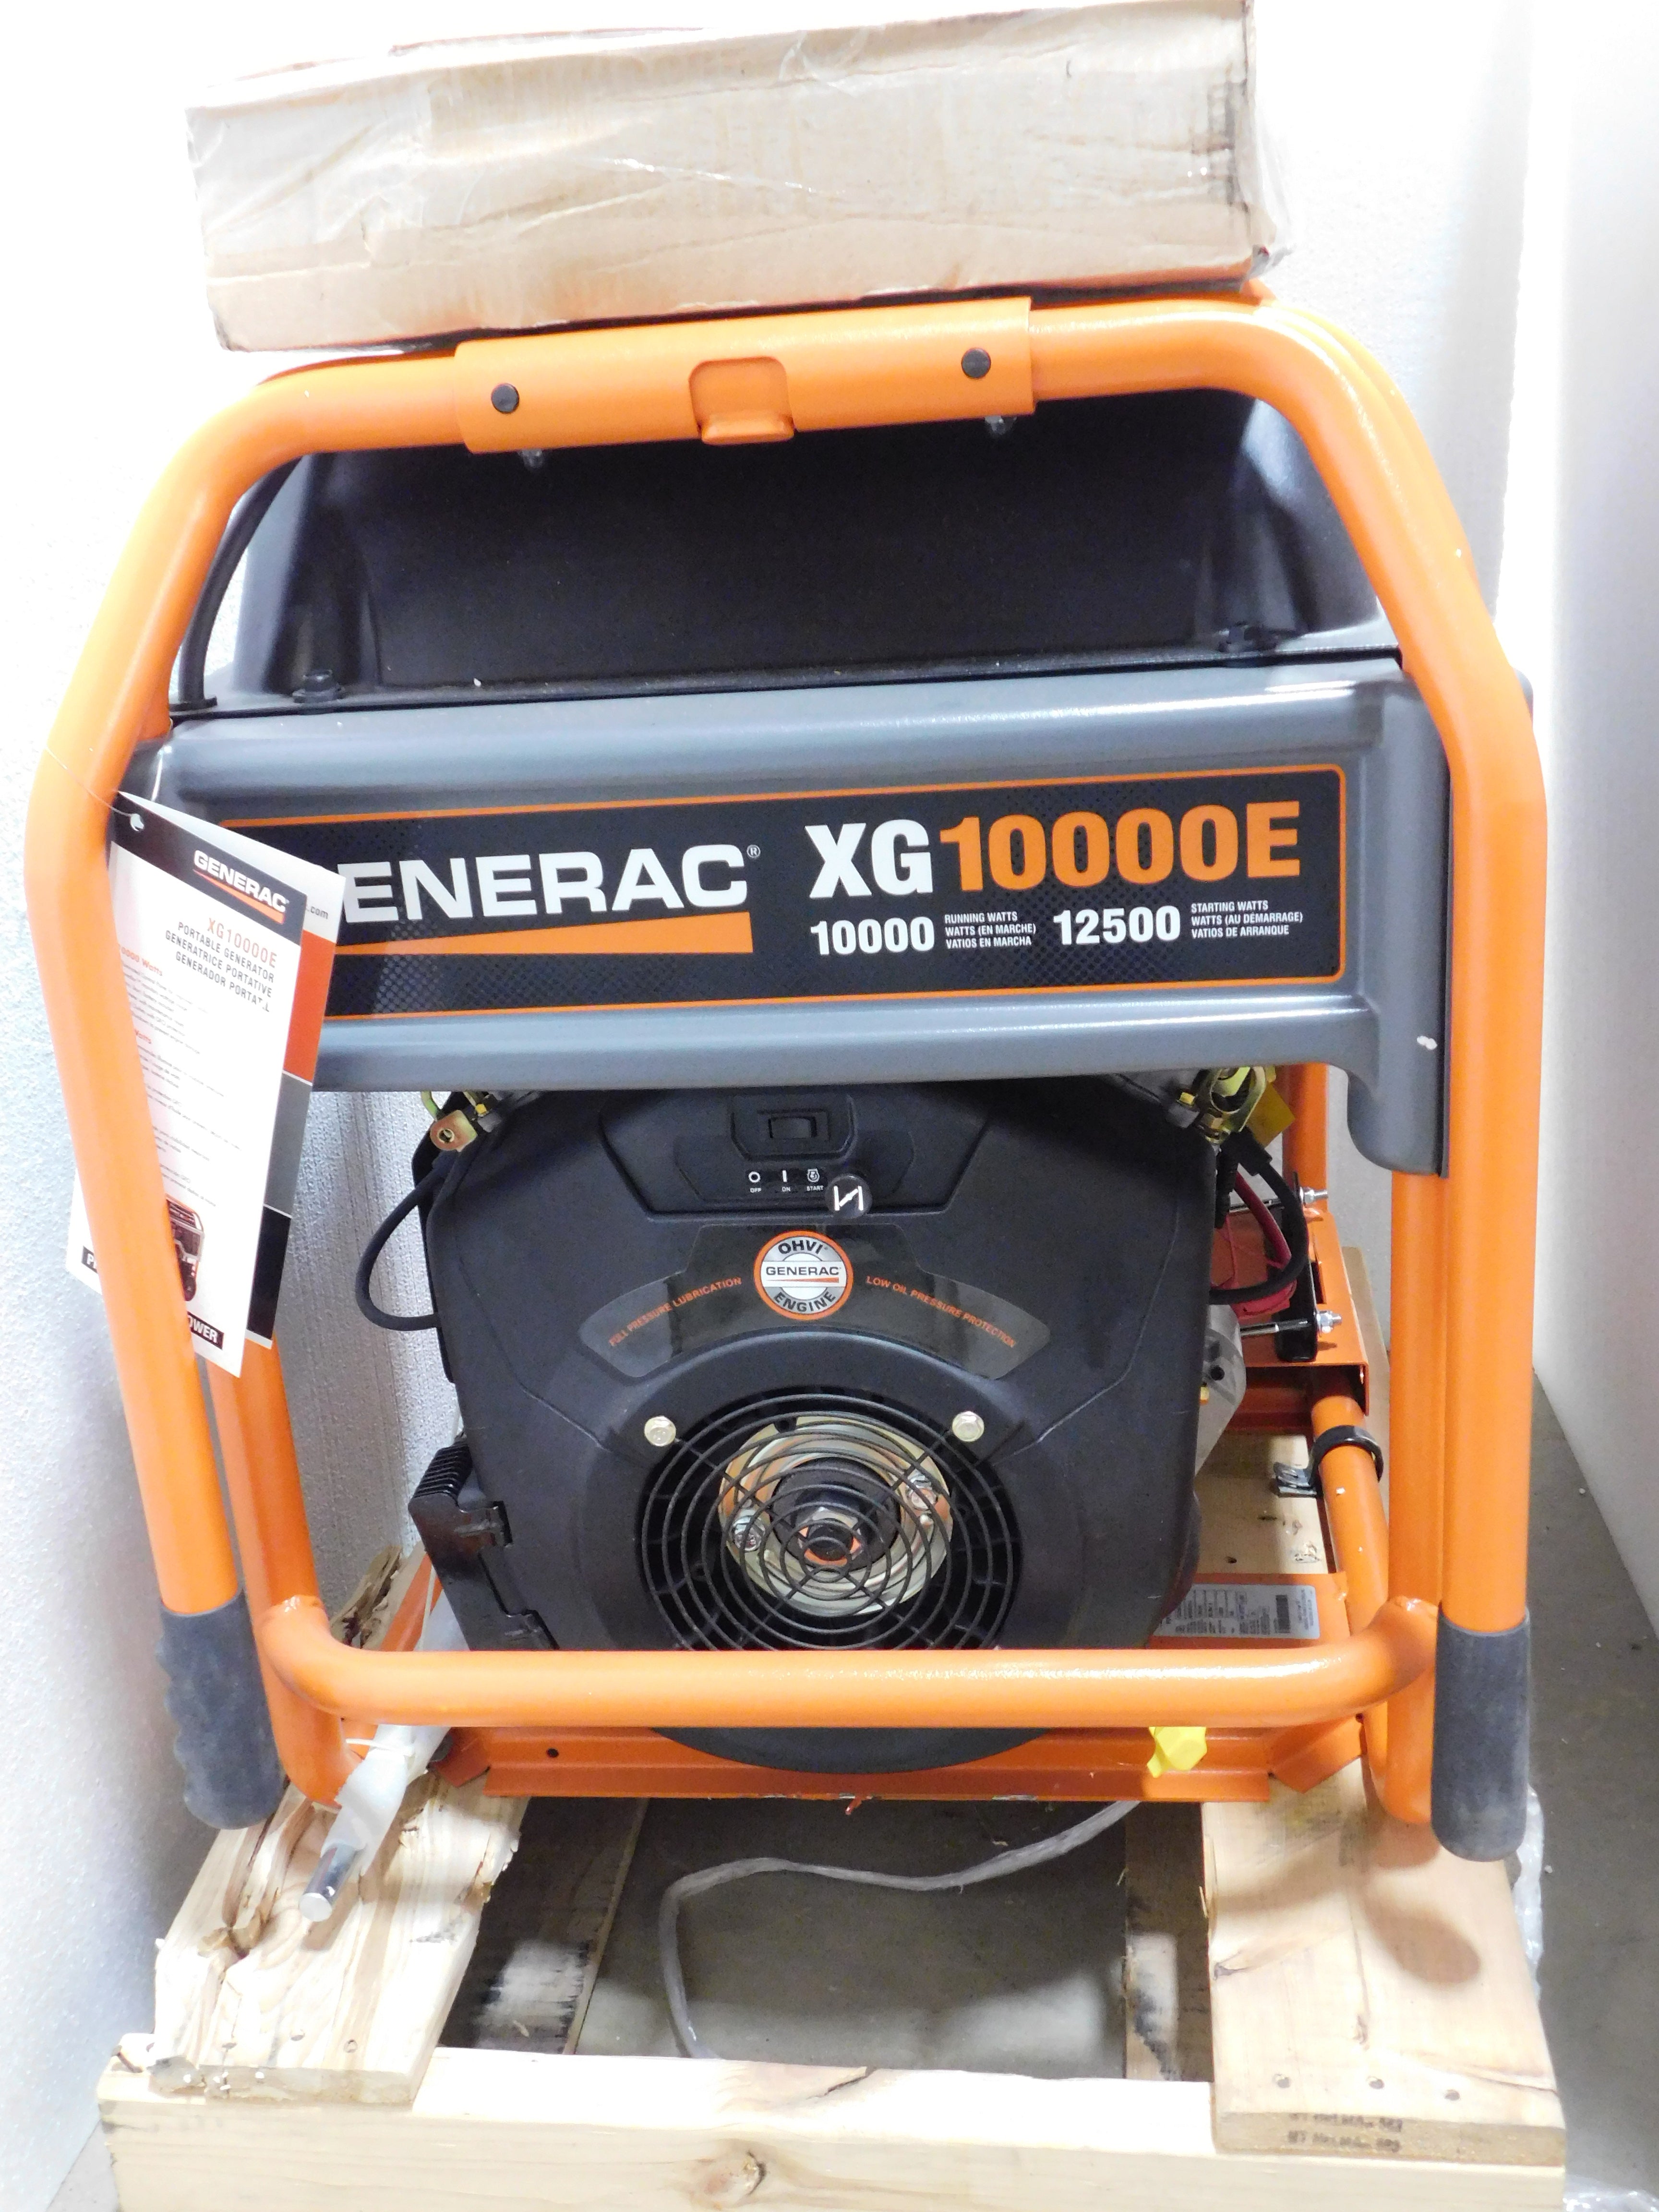 Generac Portable Generator XG Series 10,000 Watts V-Twin Engine XG10000E #5802 (Scratch n Dent)